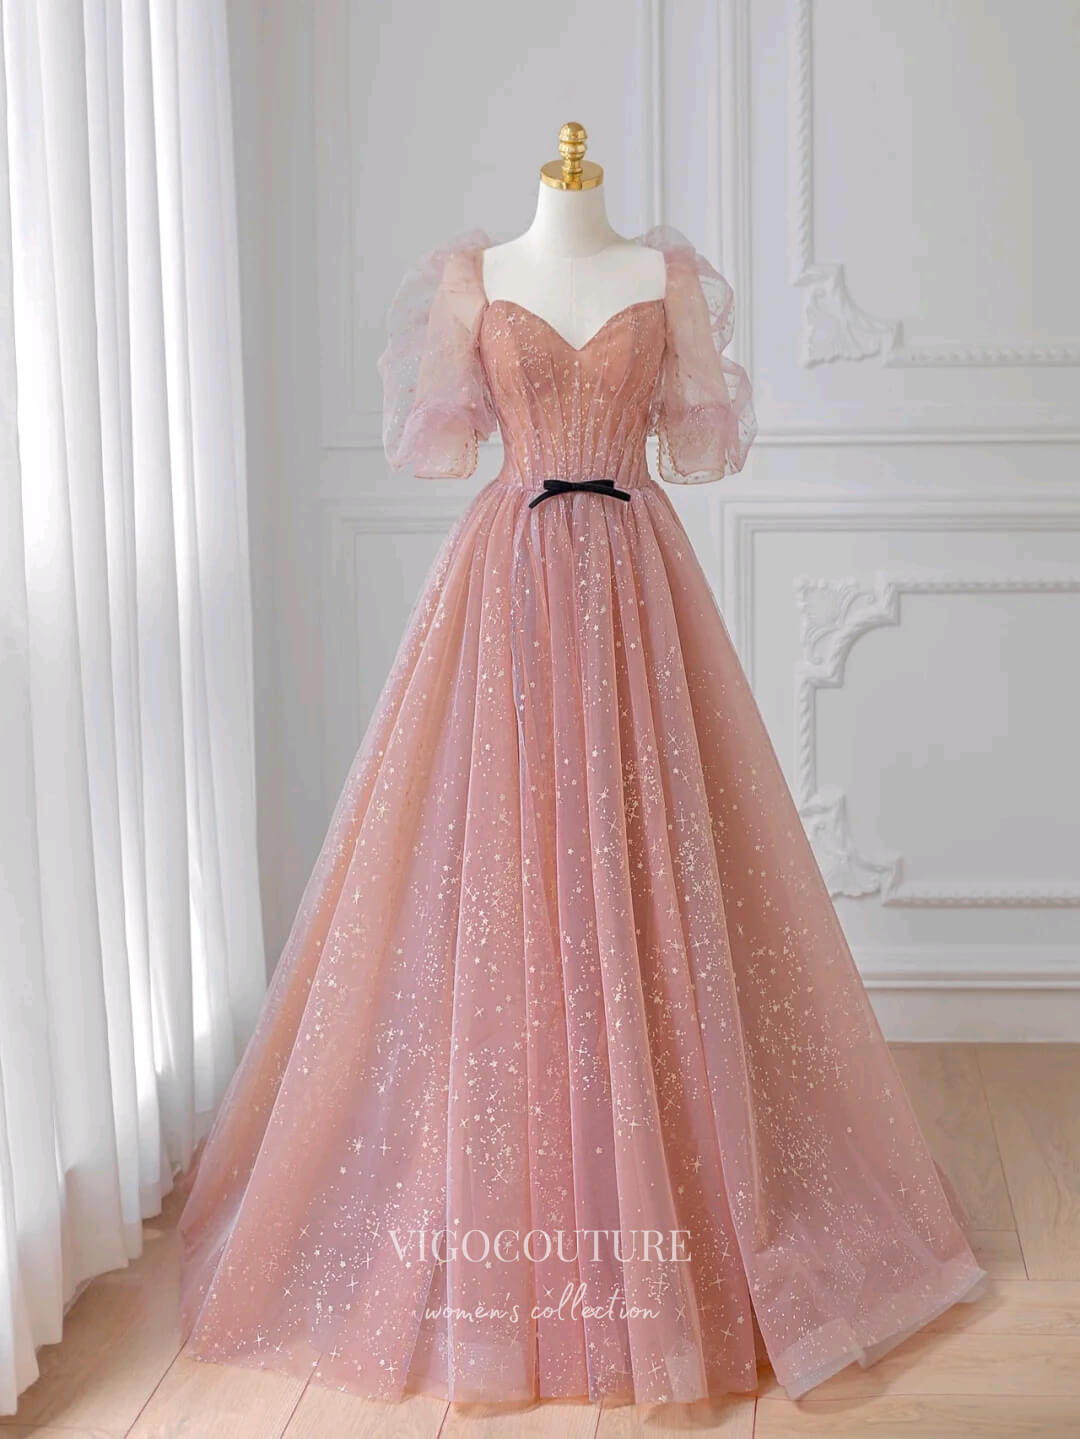 vigocouture-Pink Puffed Sleeve Prom Dress Sparkly Beaded Formal Dresses 21151-Prom Dresses-vigocouture-Pink-Custom Size-